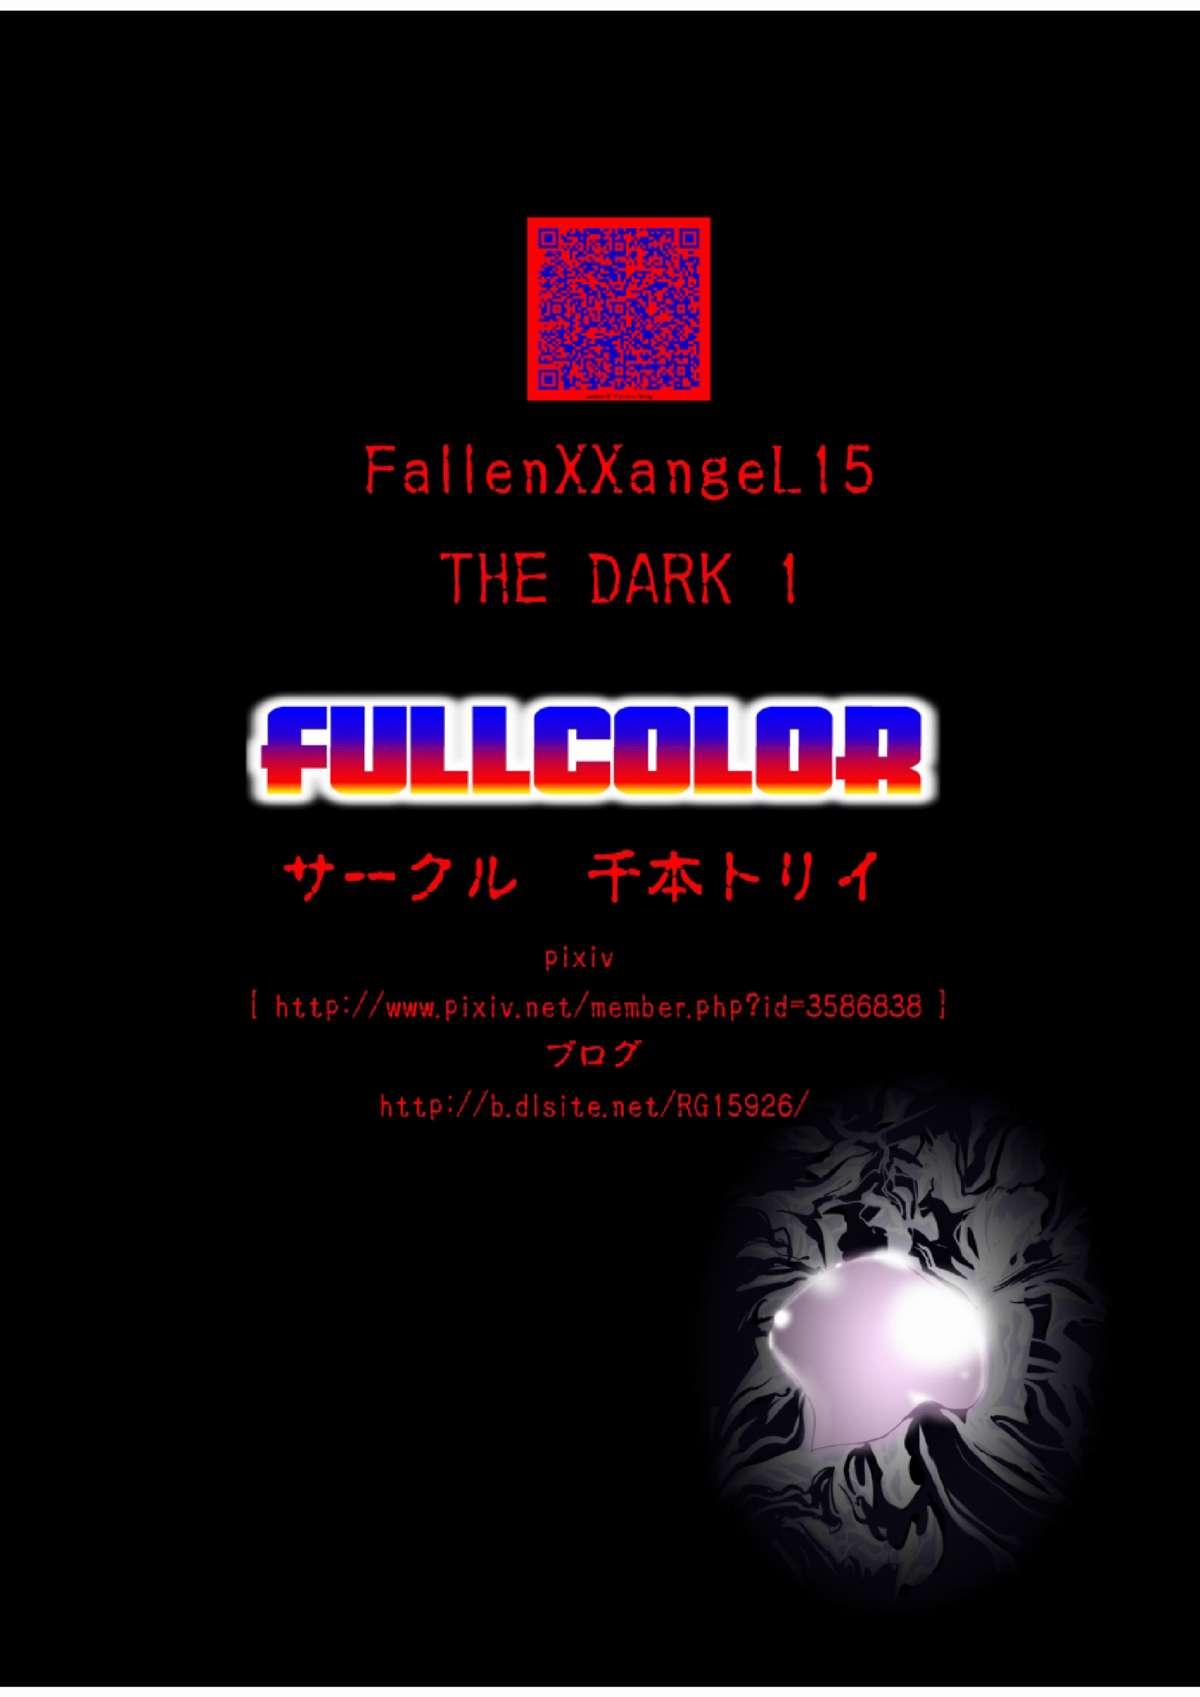 Fallen XX AngeL 15 THE DARK  Full Color 43